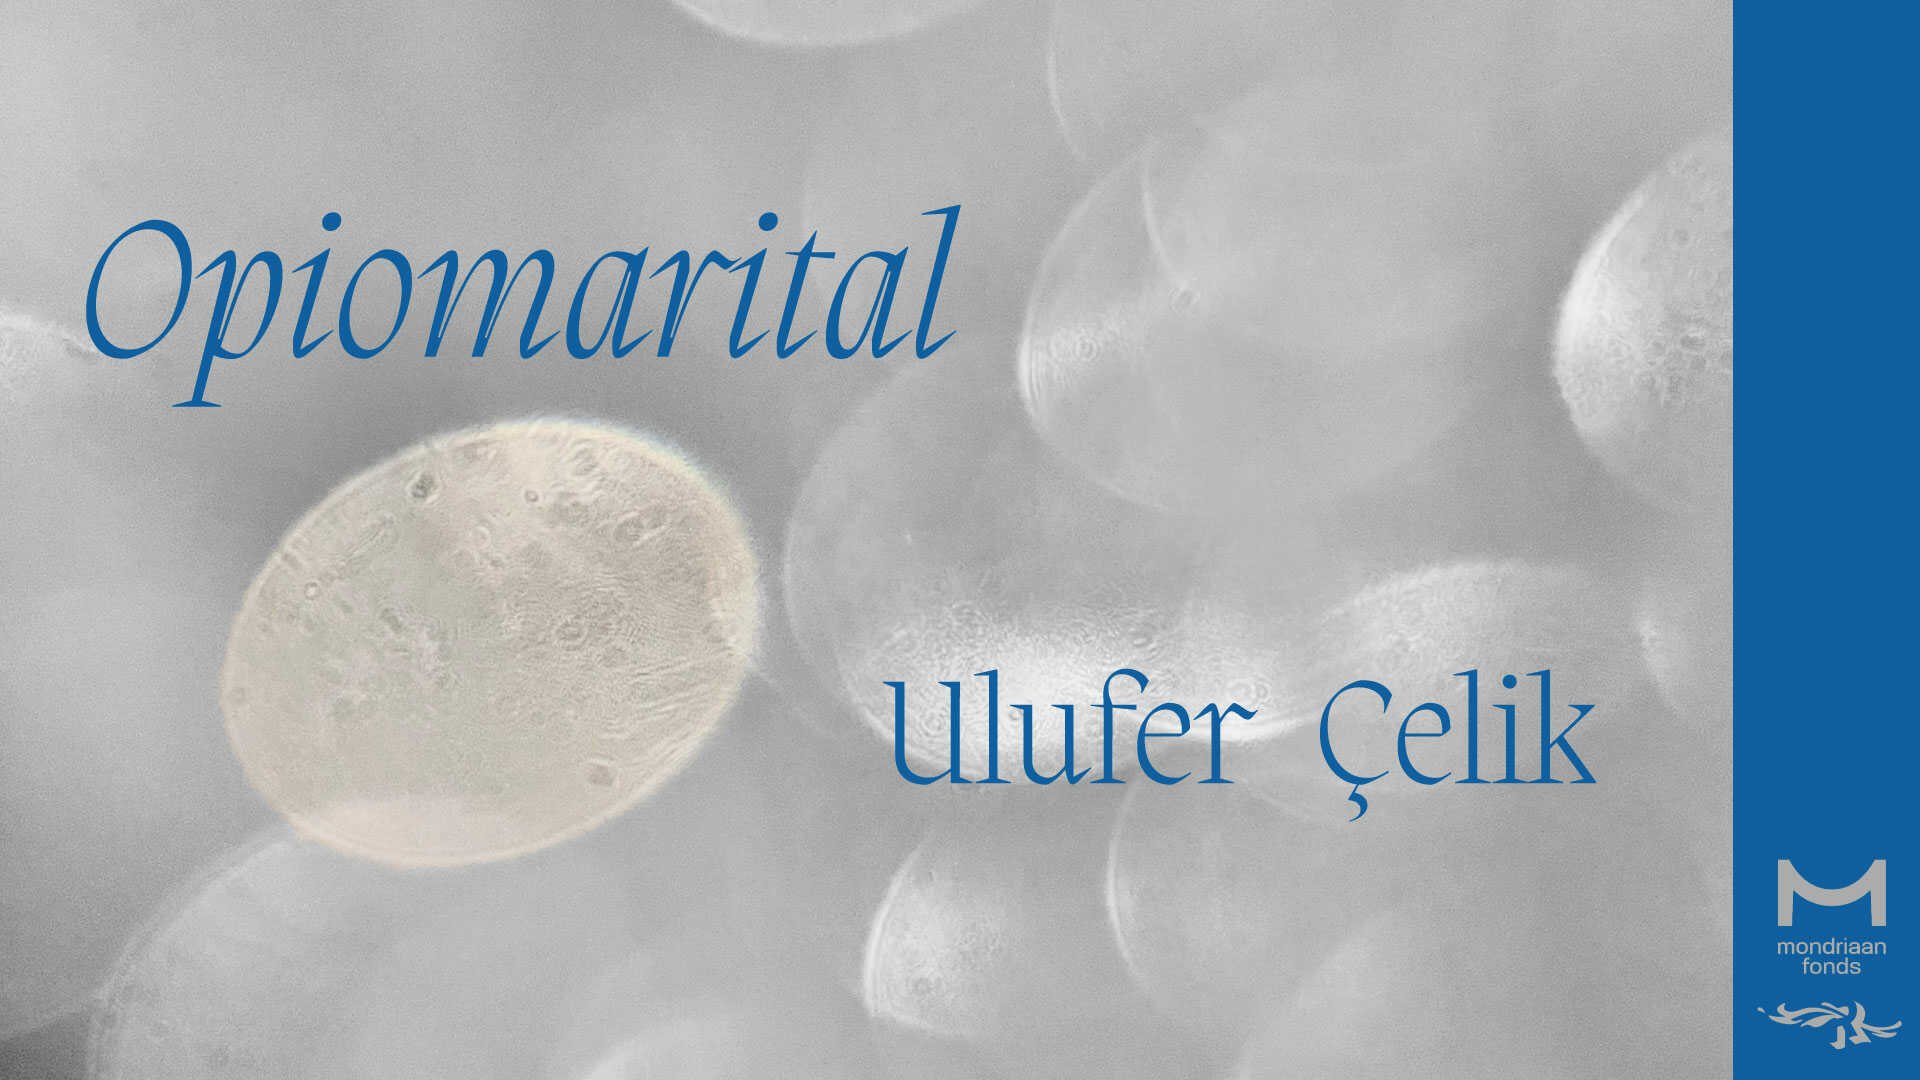 Ulufer Çelik : 'Opiomarital' ~ exhibition at 'another world' in Rotterdam. March, 2024. 